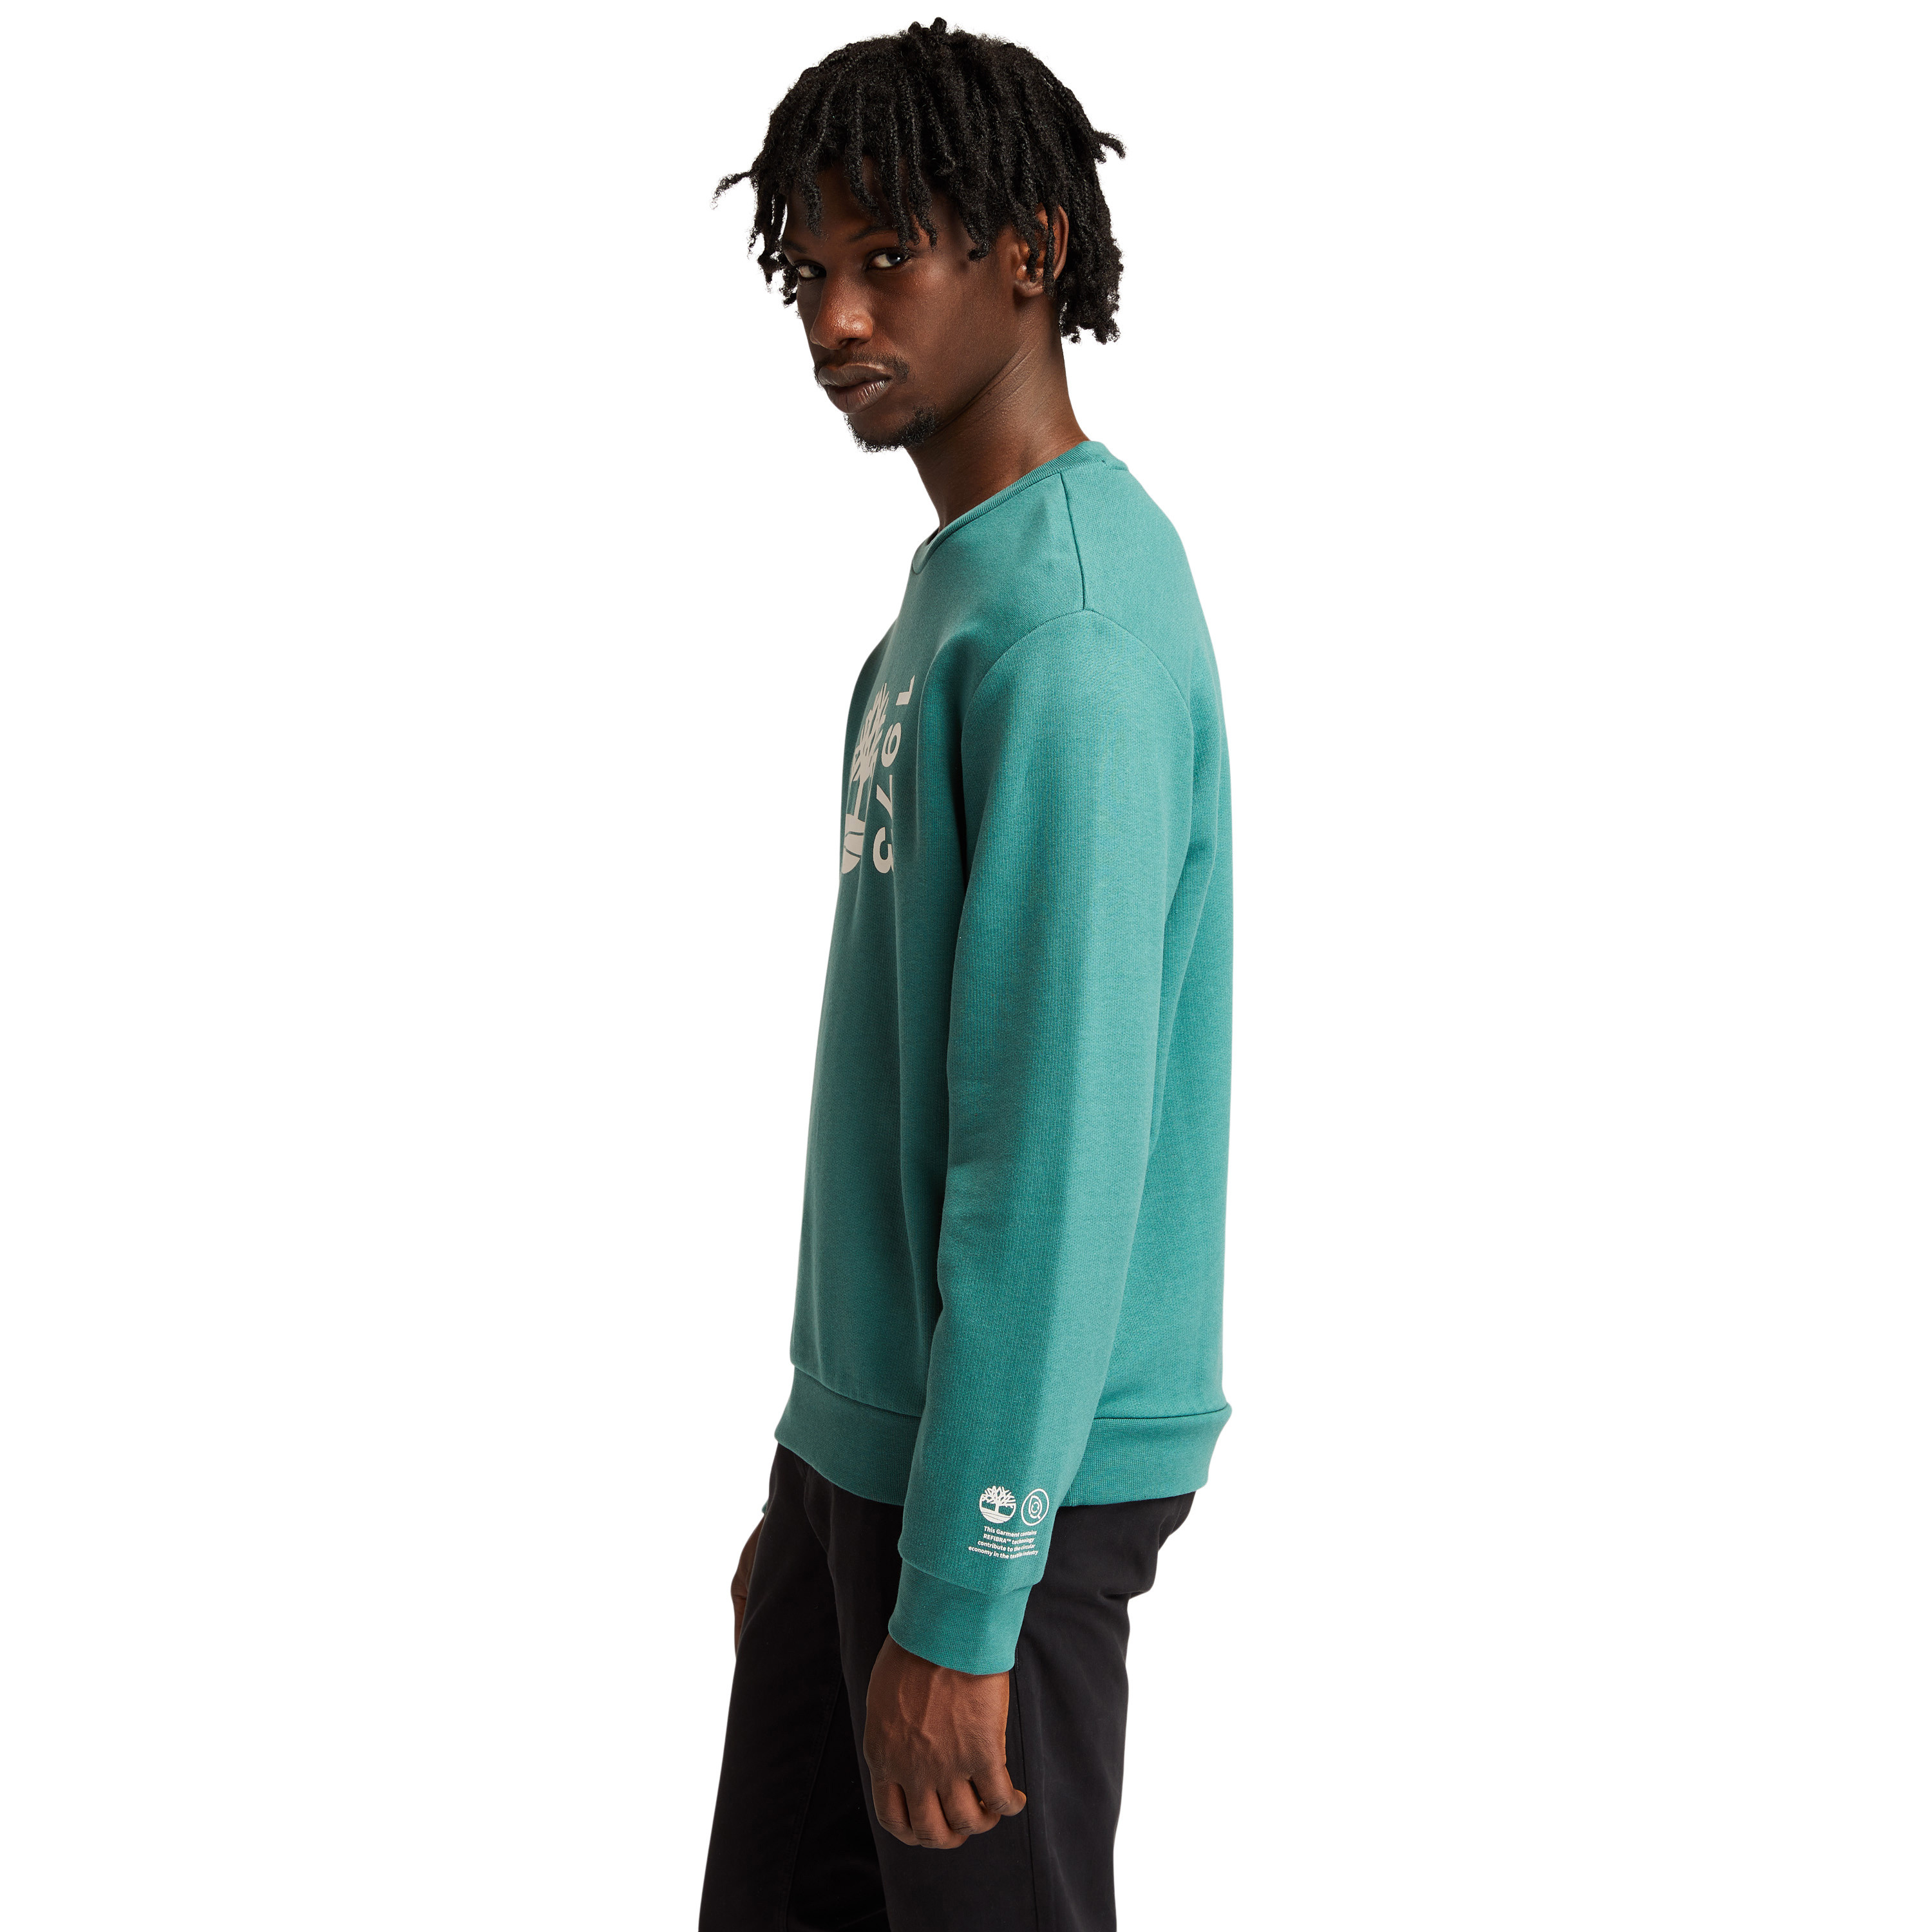 Re-Comfort EK+ sweatshirt for men, Green, large image number 5